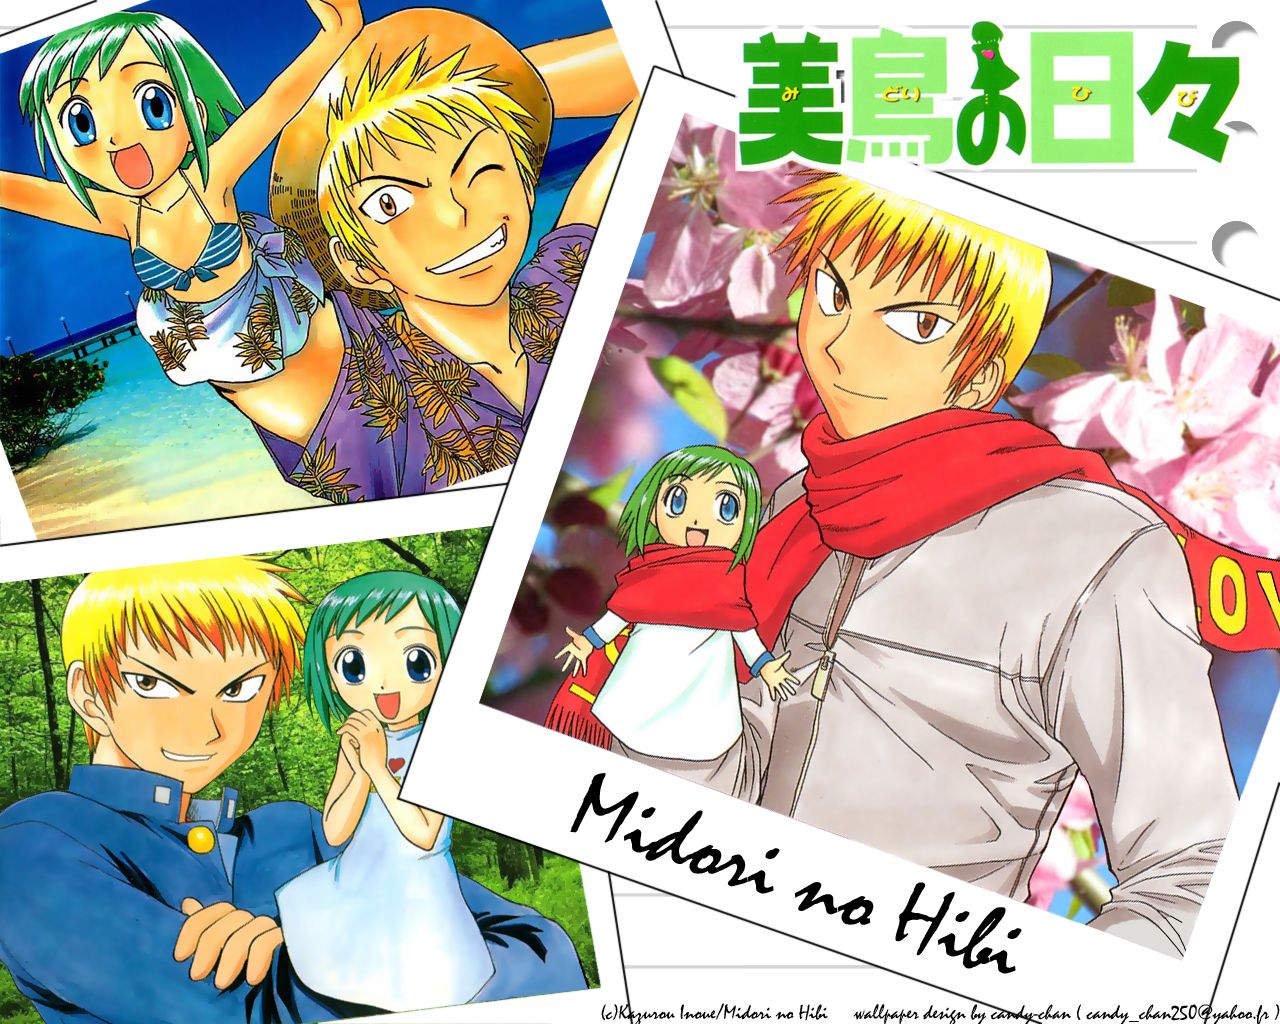 Midori no Hibi (Midori Days) Image #174251 - Zerochan Anime Image Board